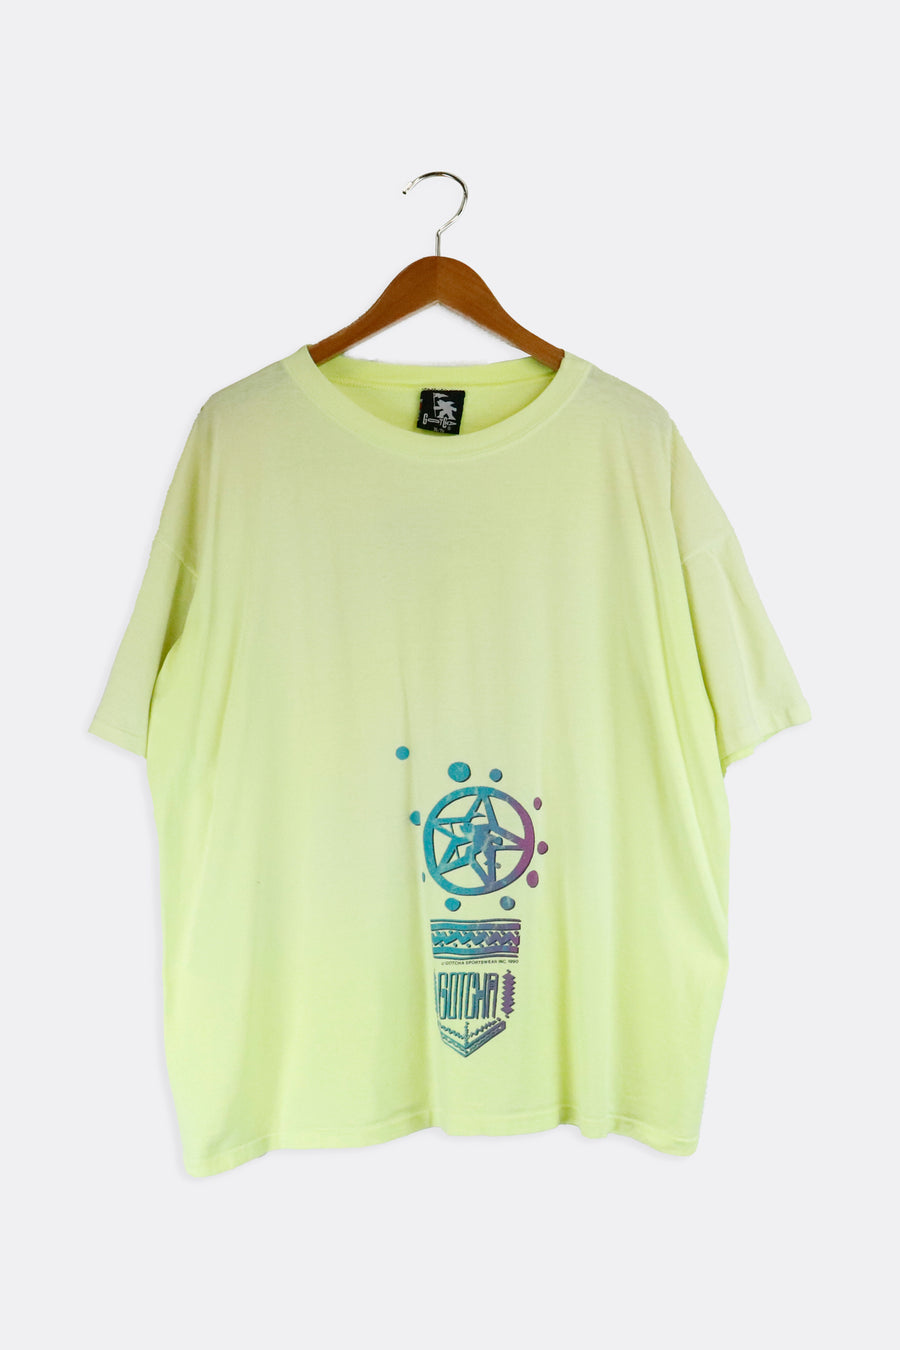 Vintage 1990 Gotcha Sports Wear Star Graphic T Shirt Sz XL